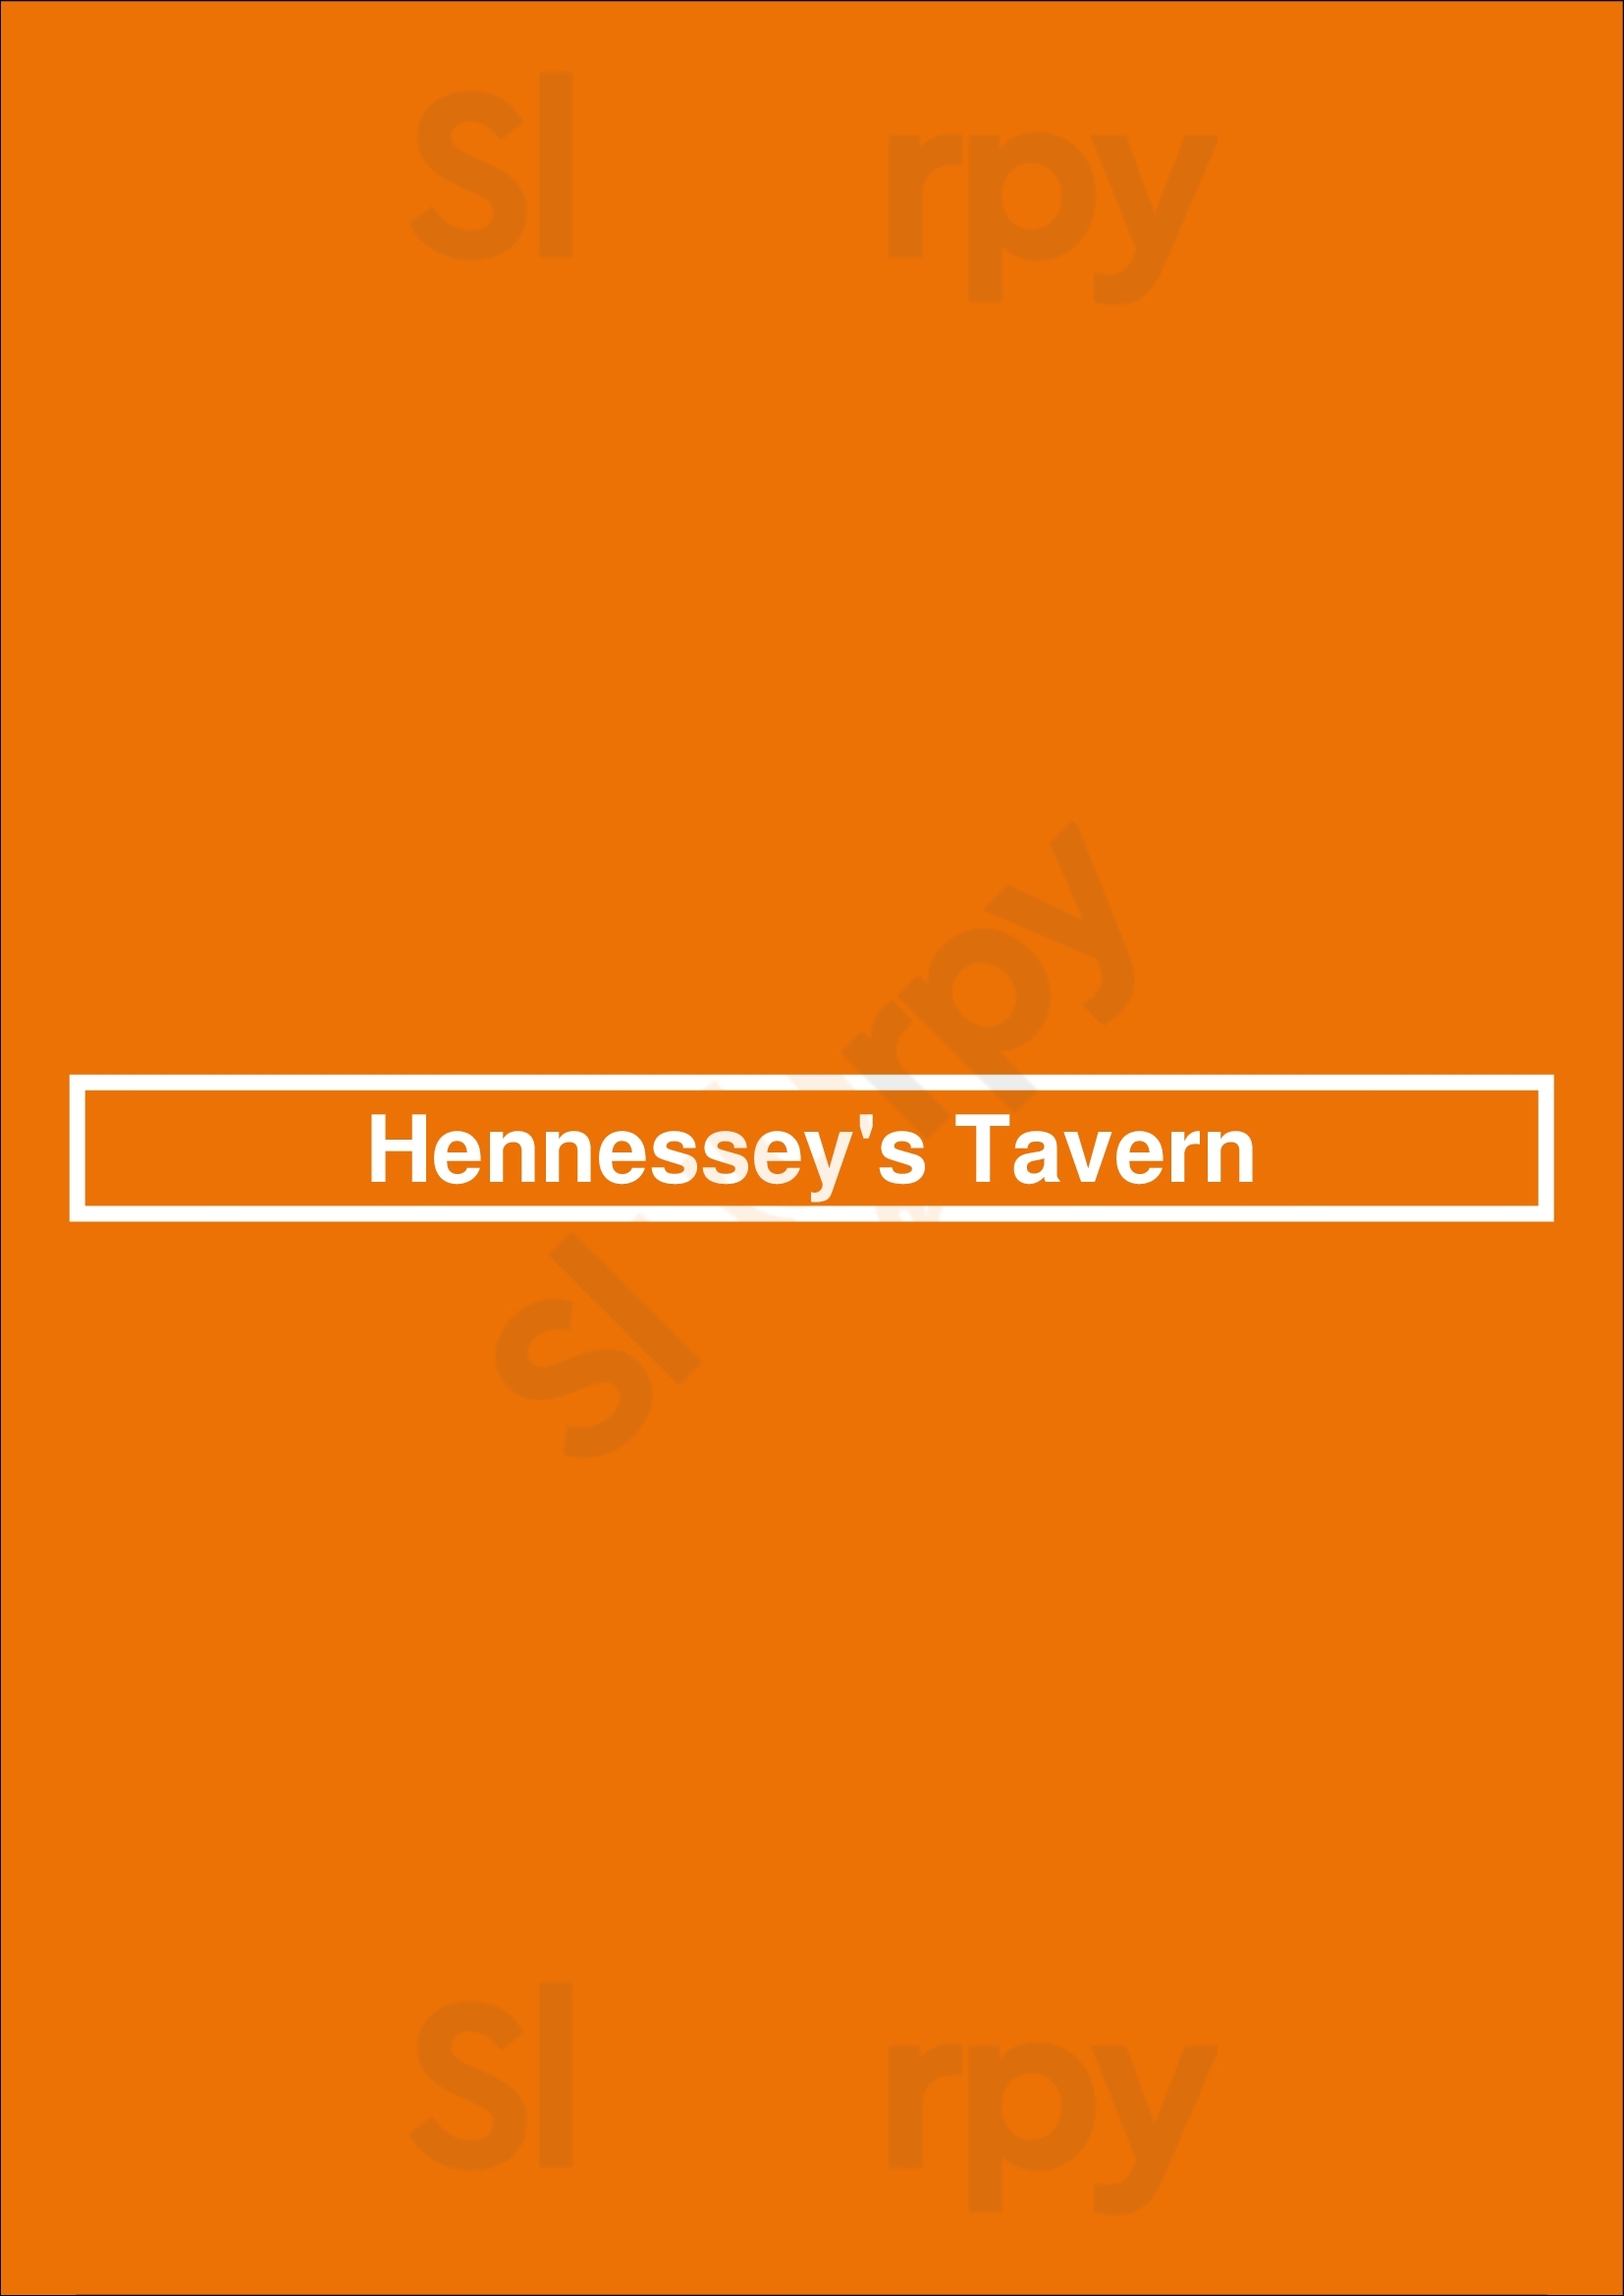 Hennessey's Tavern Carlsbad Menu - 1